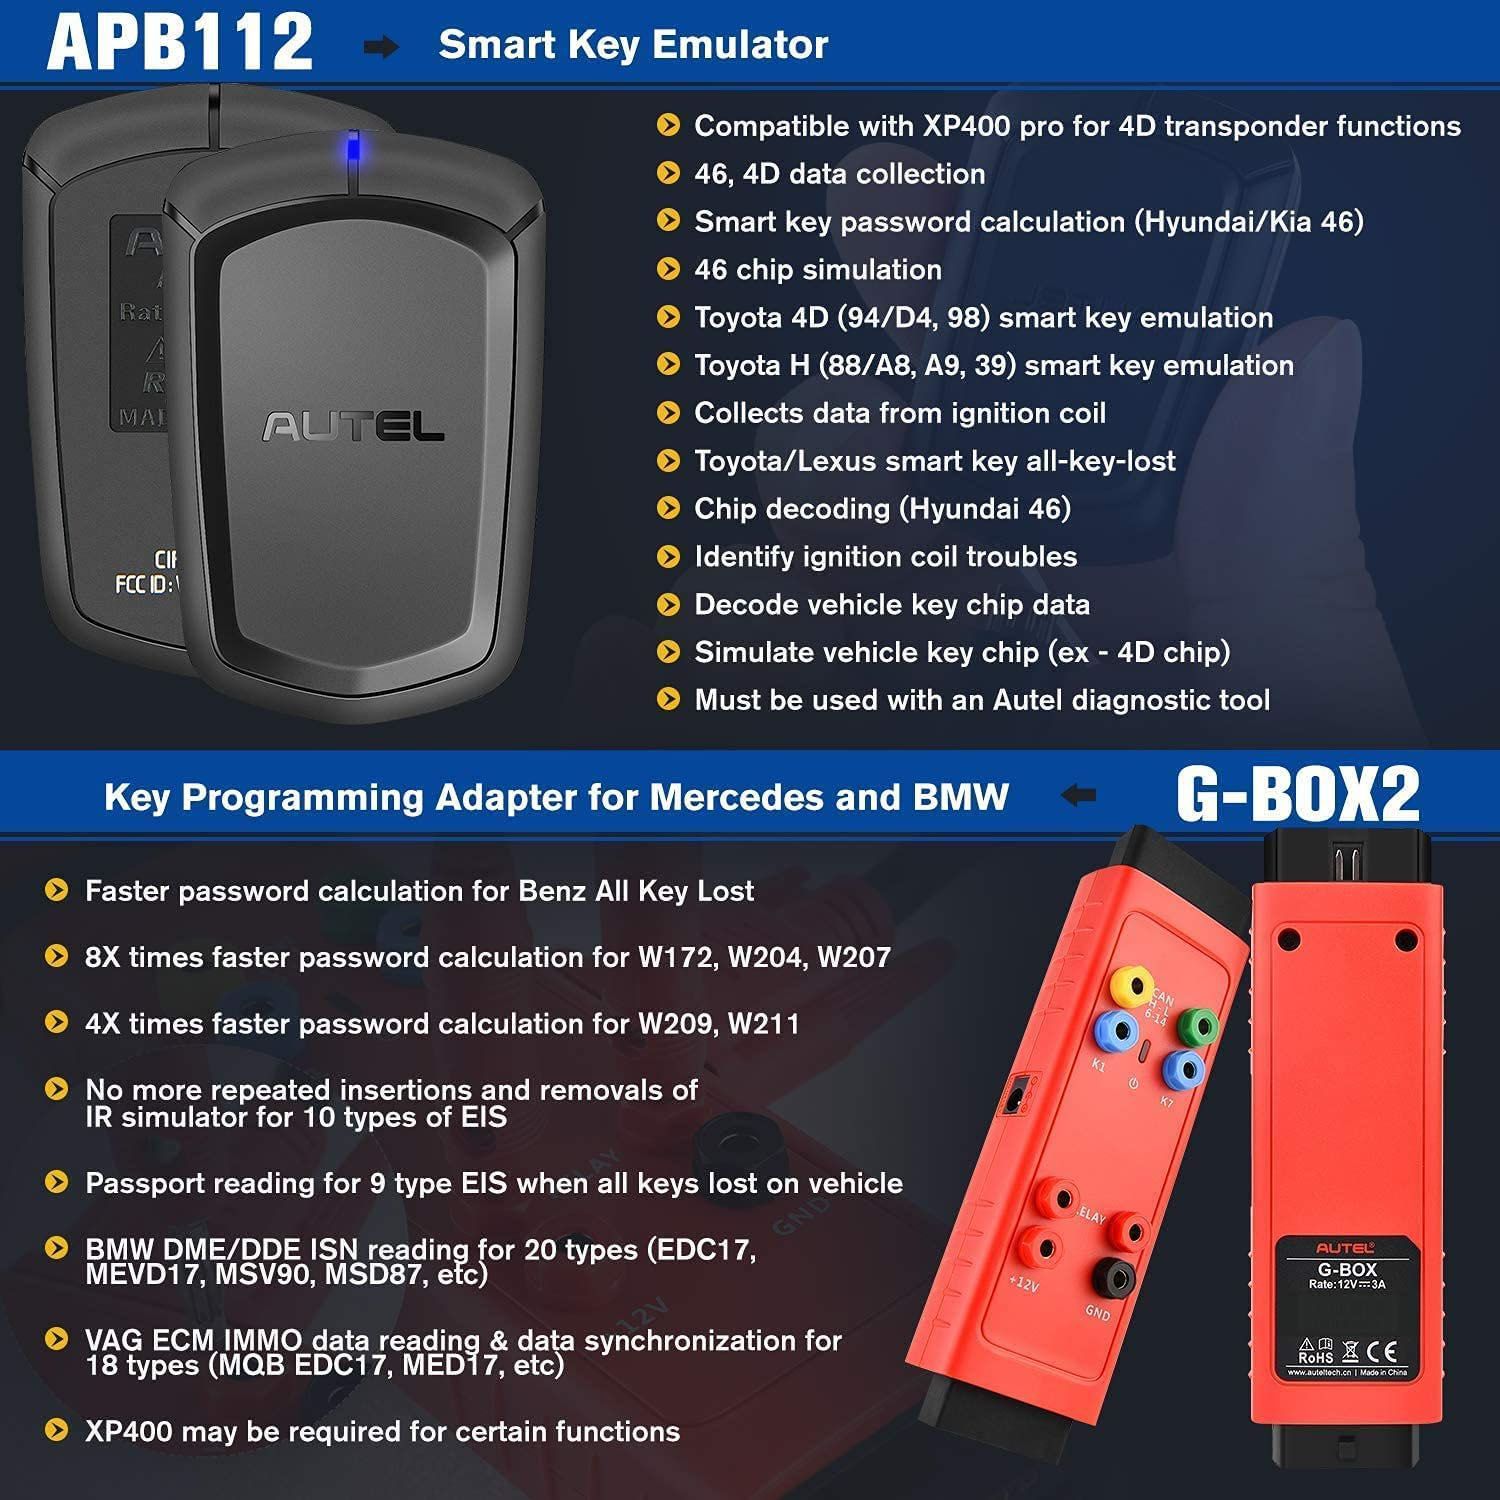  Autel apb112 avec gbox2